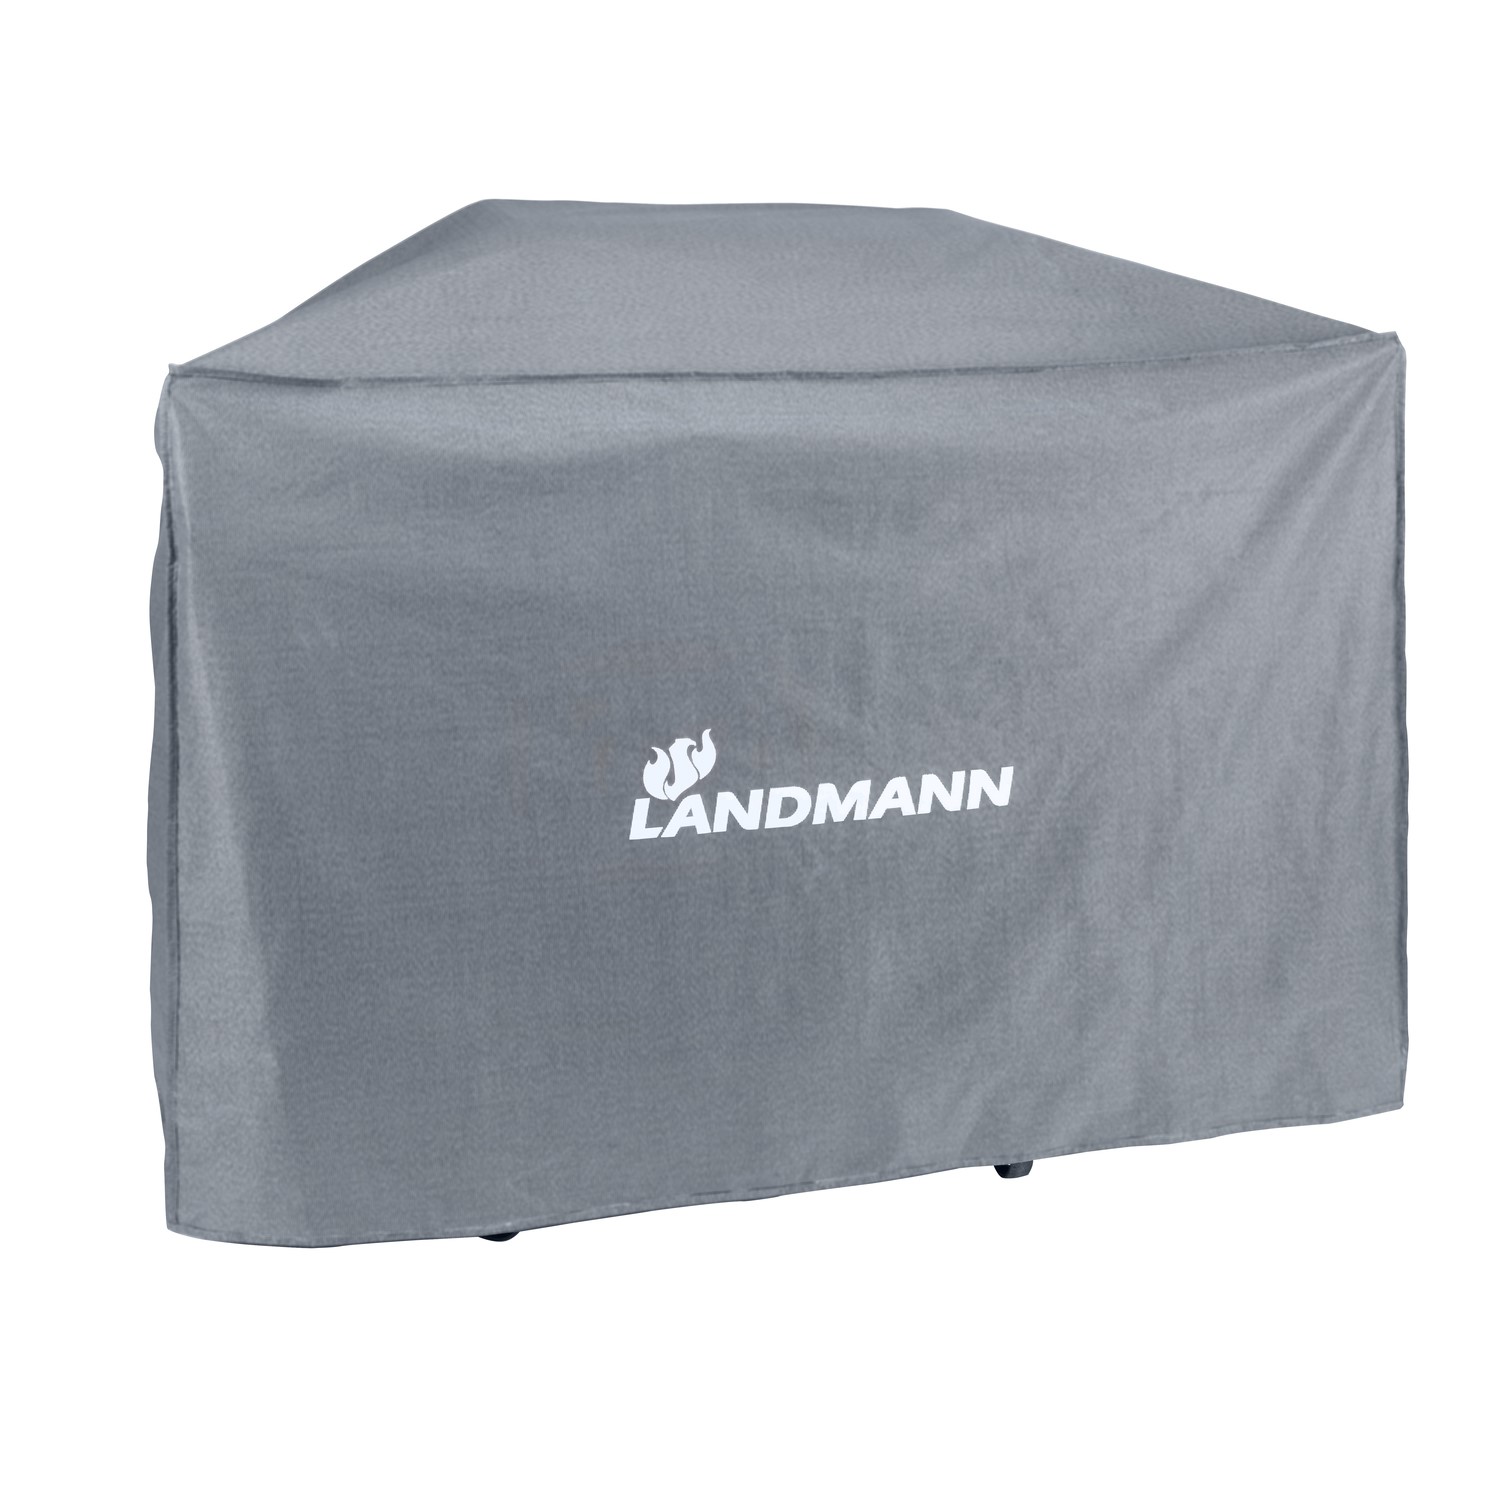 Landmann Premium BBQ Cover - Large